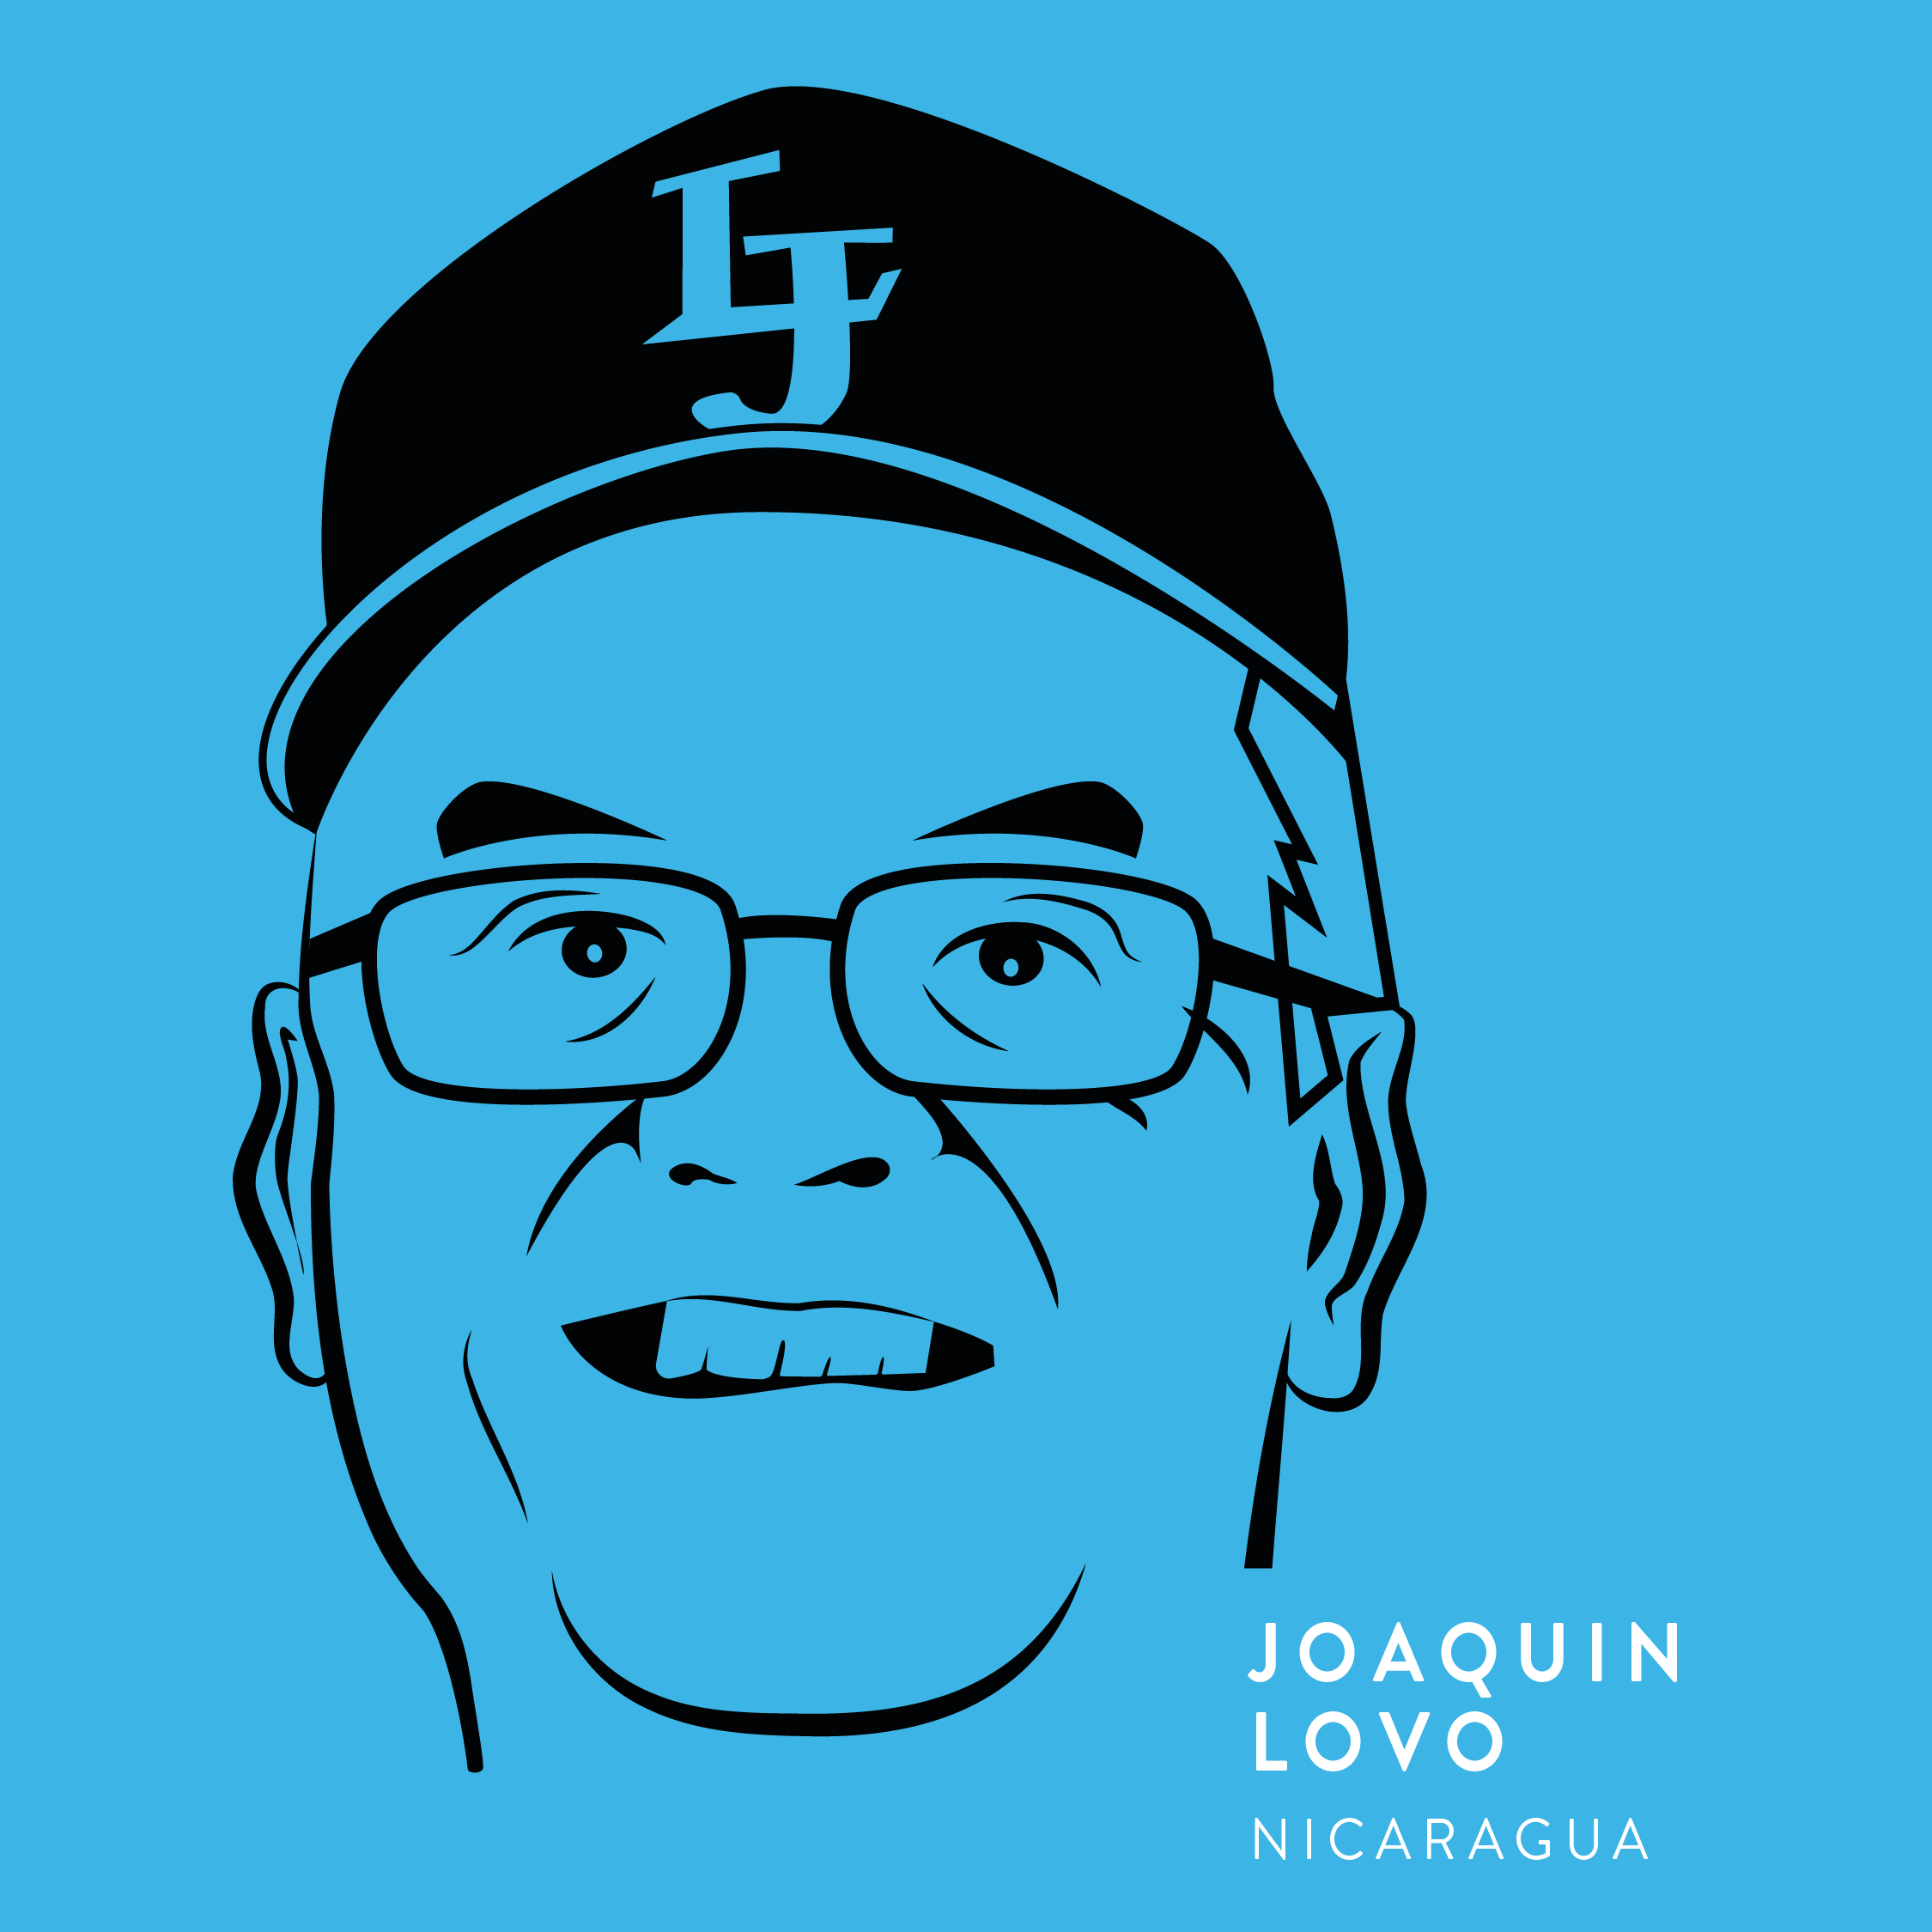 Meet Nicaragua coffee farmer Luis Joaquin Lovo